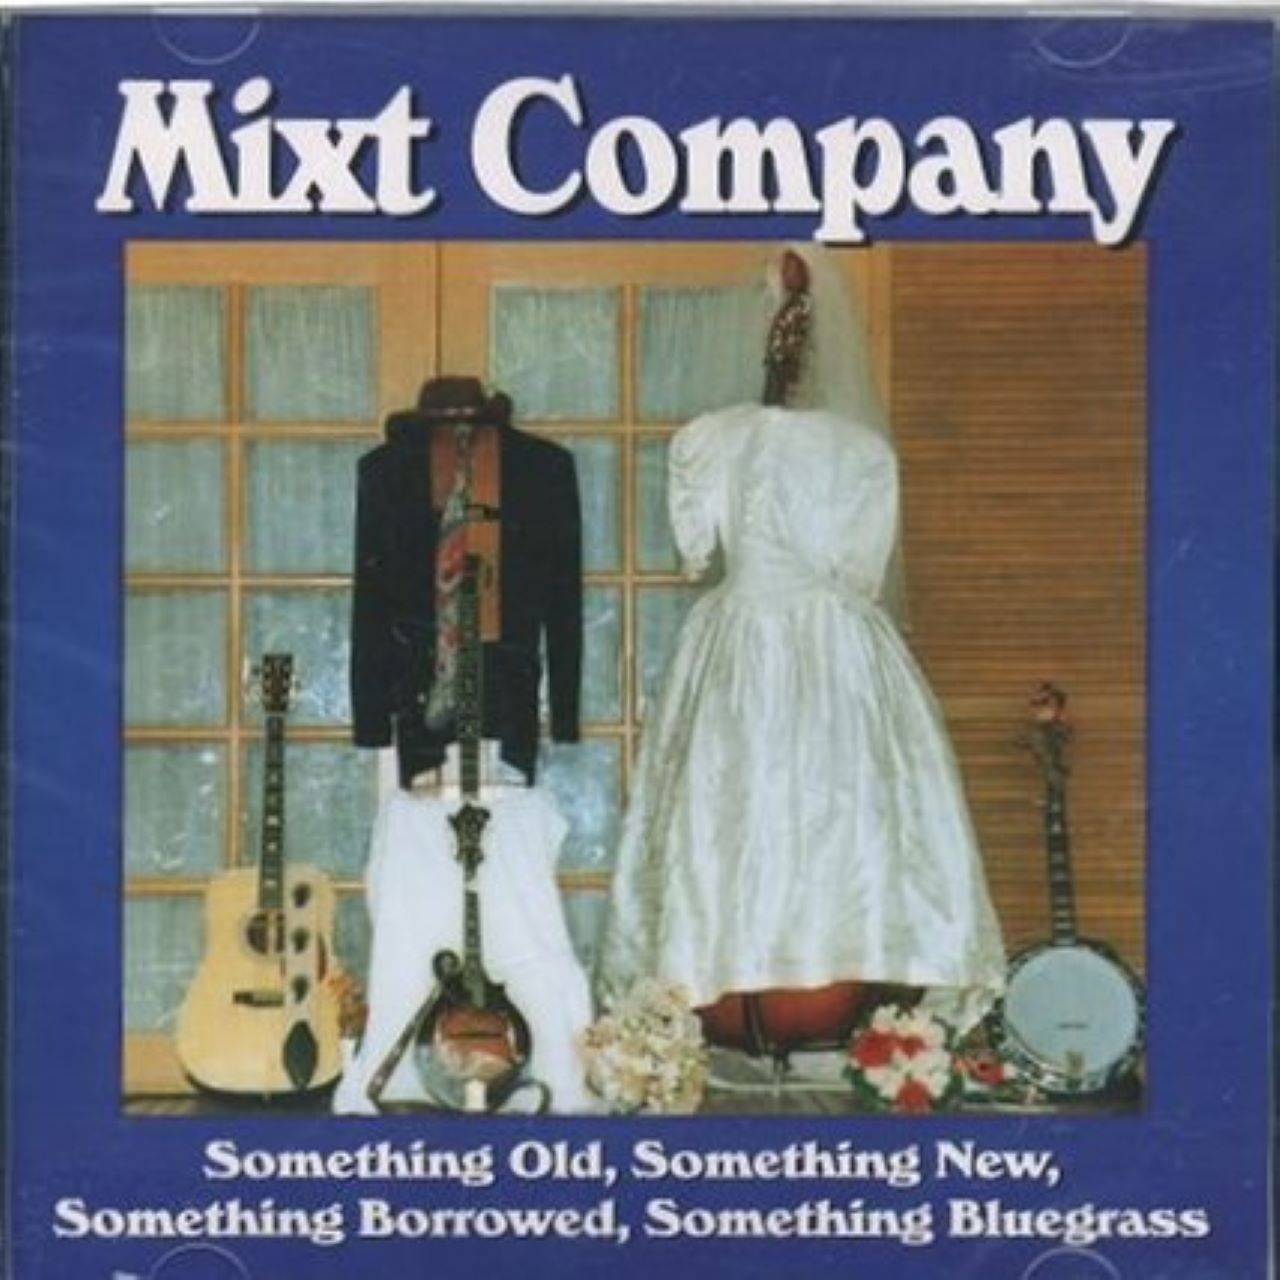 Mixt Company - Something Old, Something New, Something Borrowed, Something Bluegrass cover album